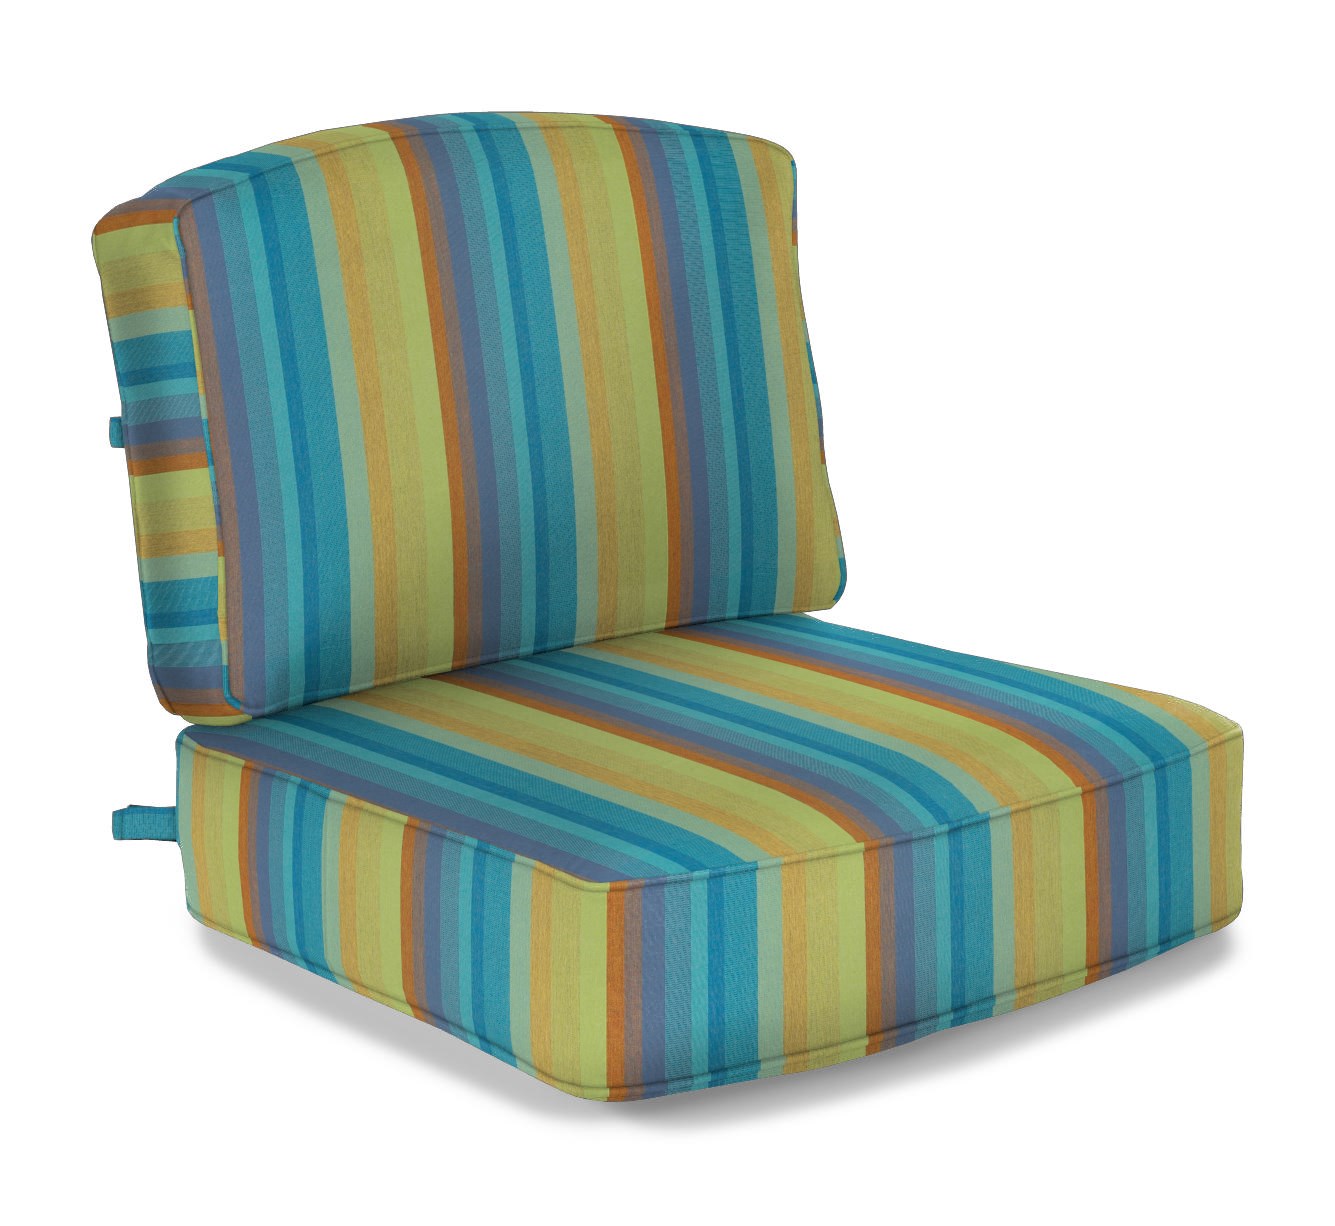 Hanamint Grand Tuscany Style Deep Seating Cushion in Astoria Lagoon Clearance